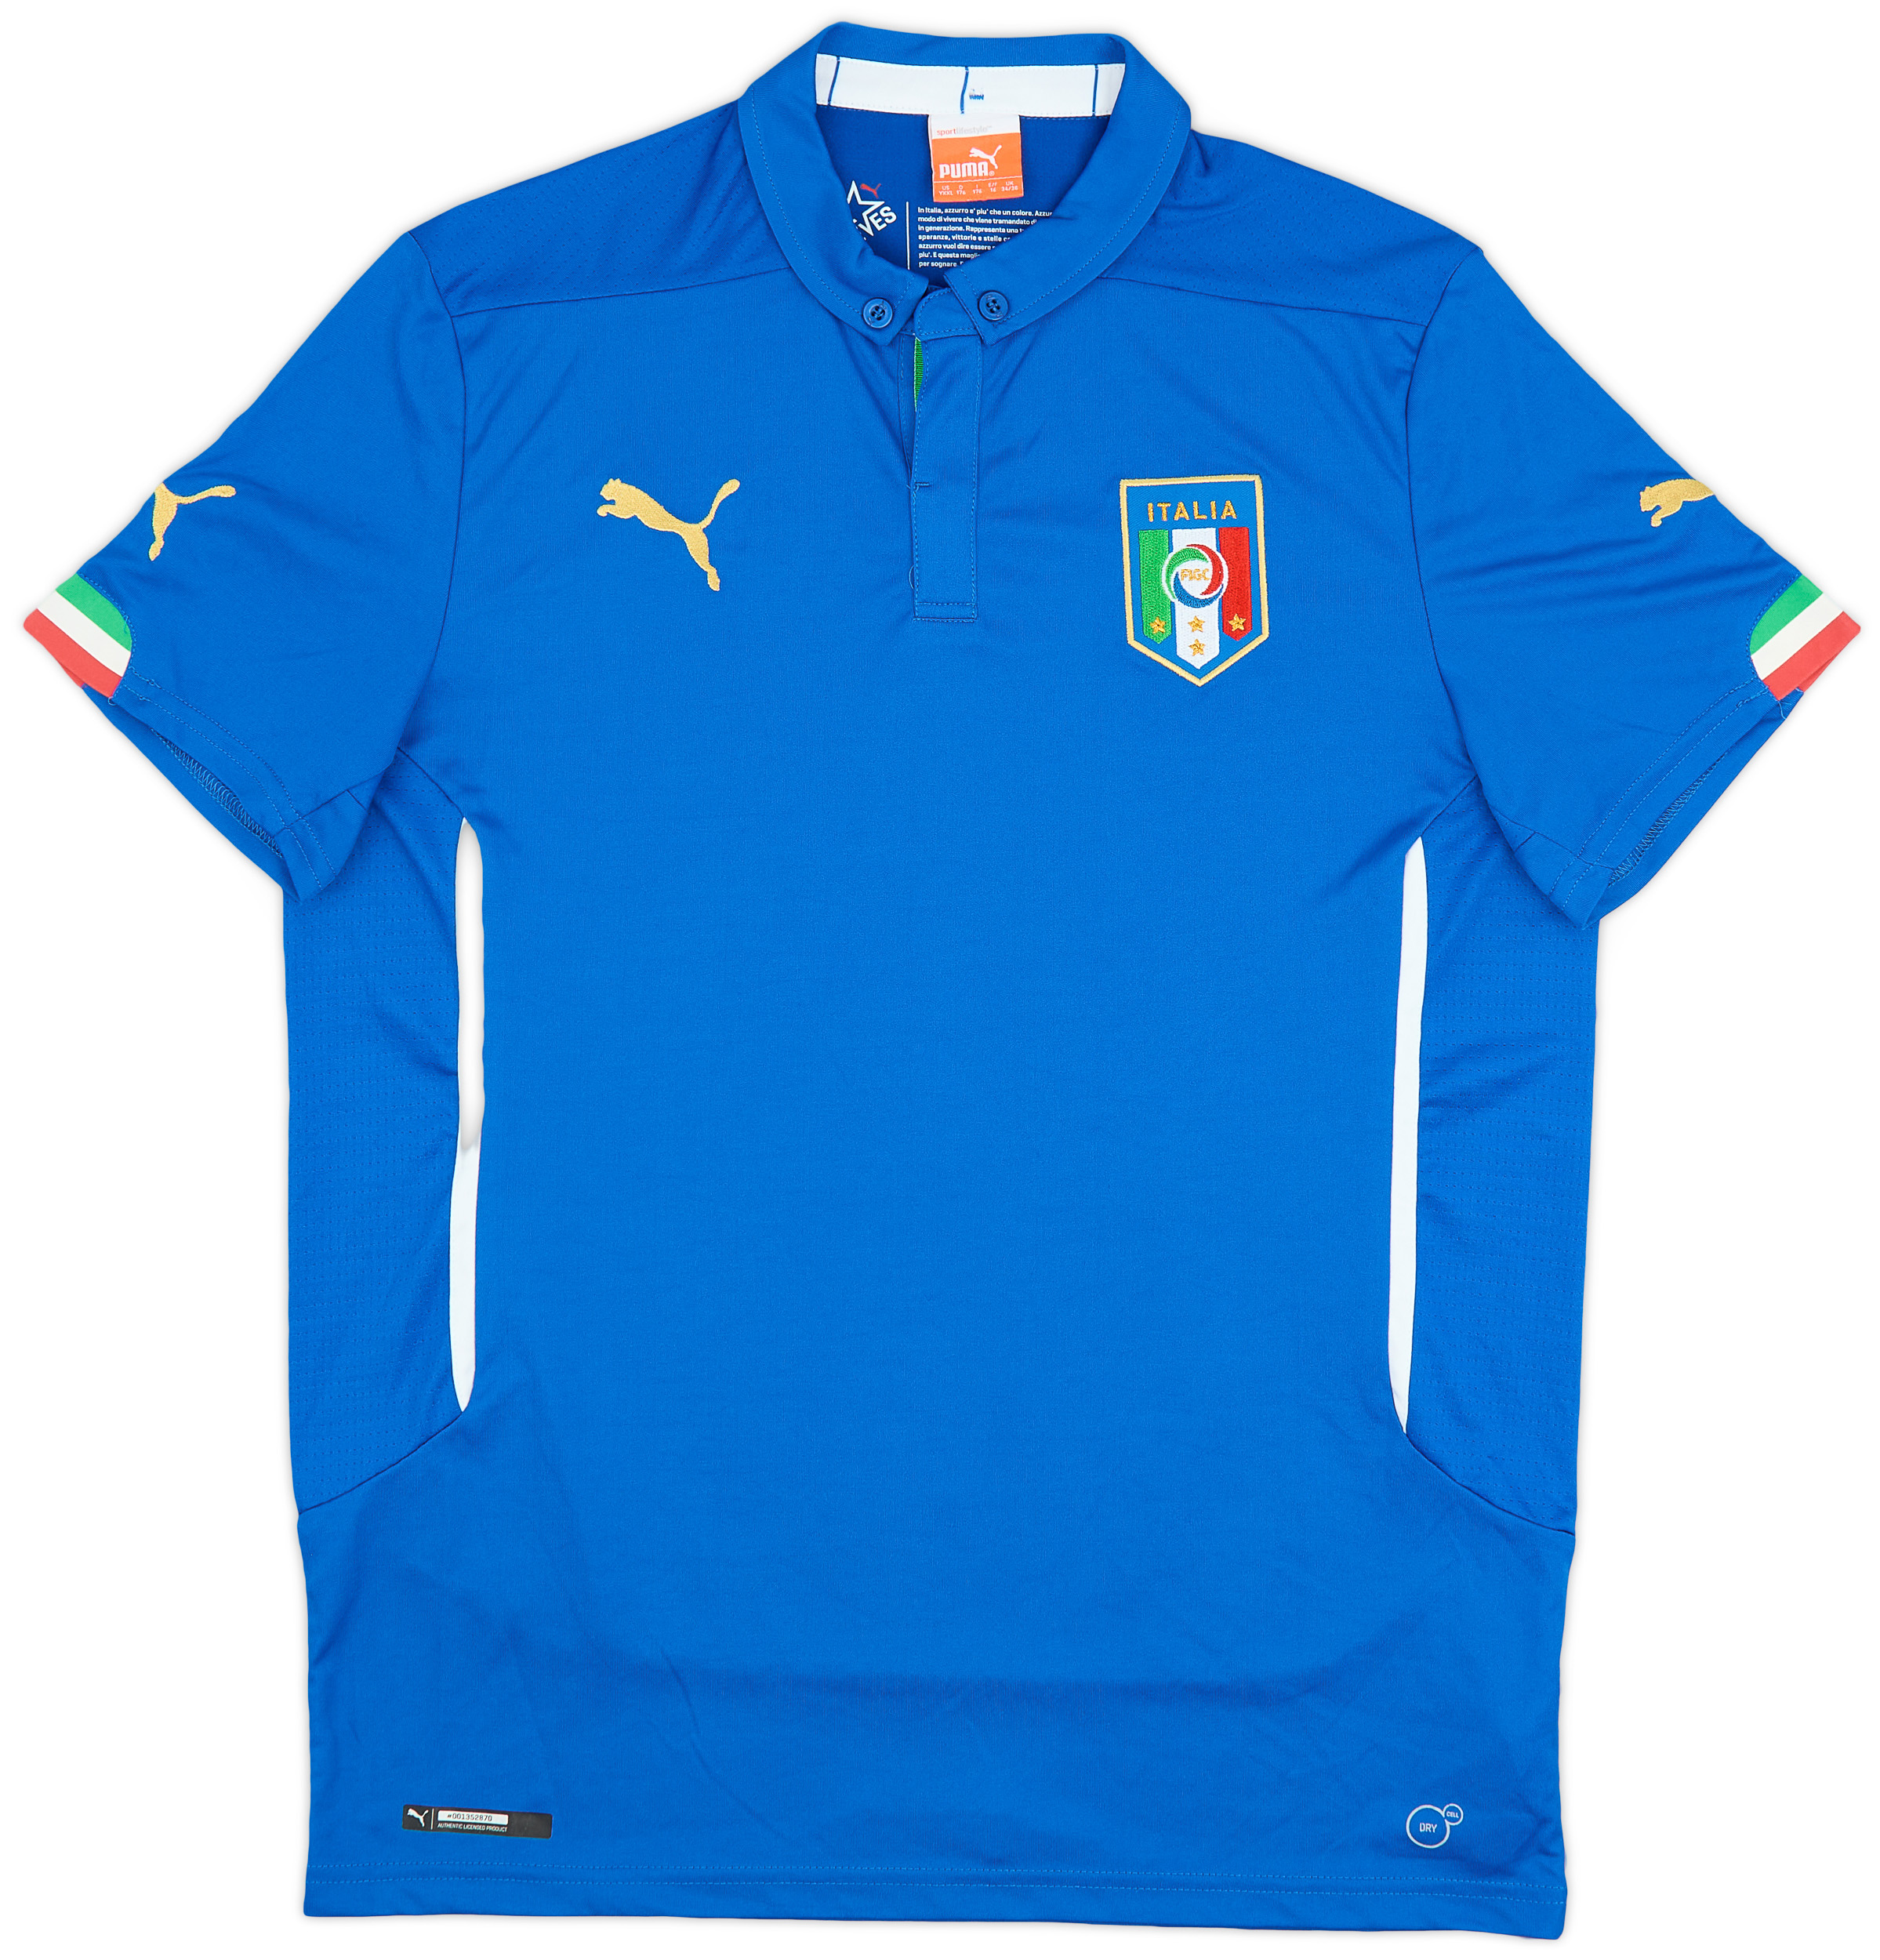 2014-15 Italy Home Shirt - 9/10 - (YXXL)